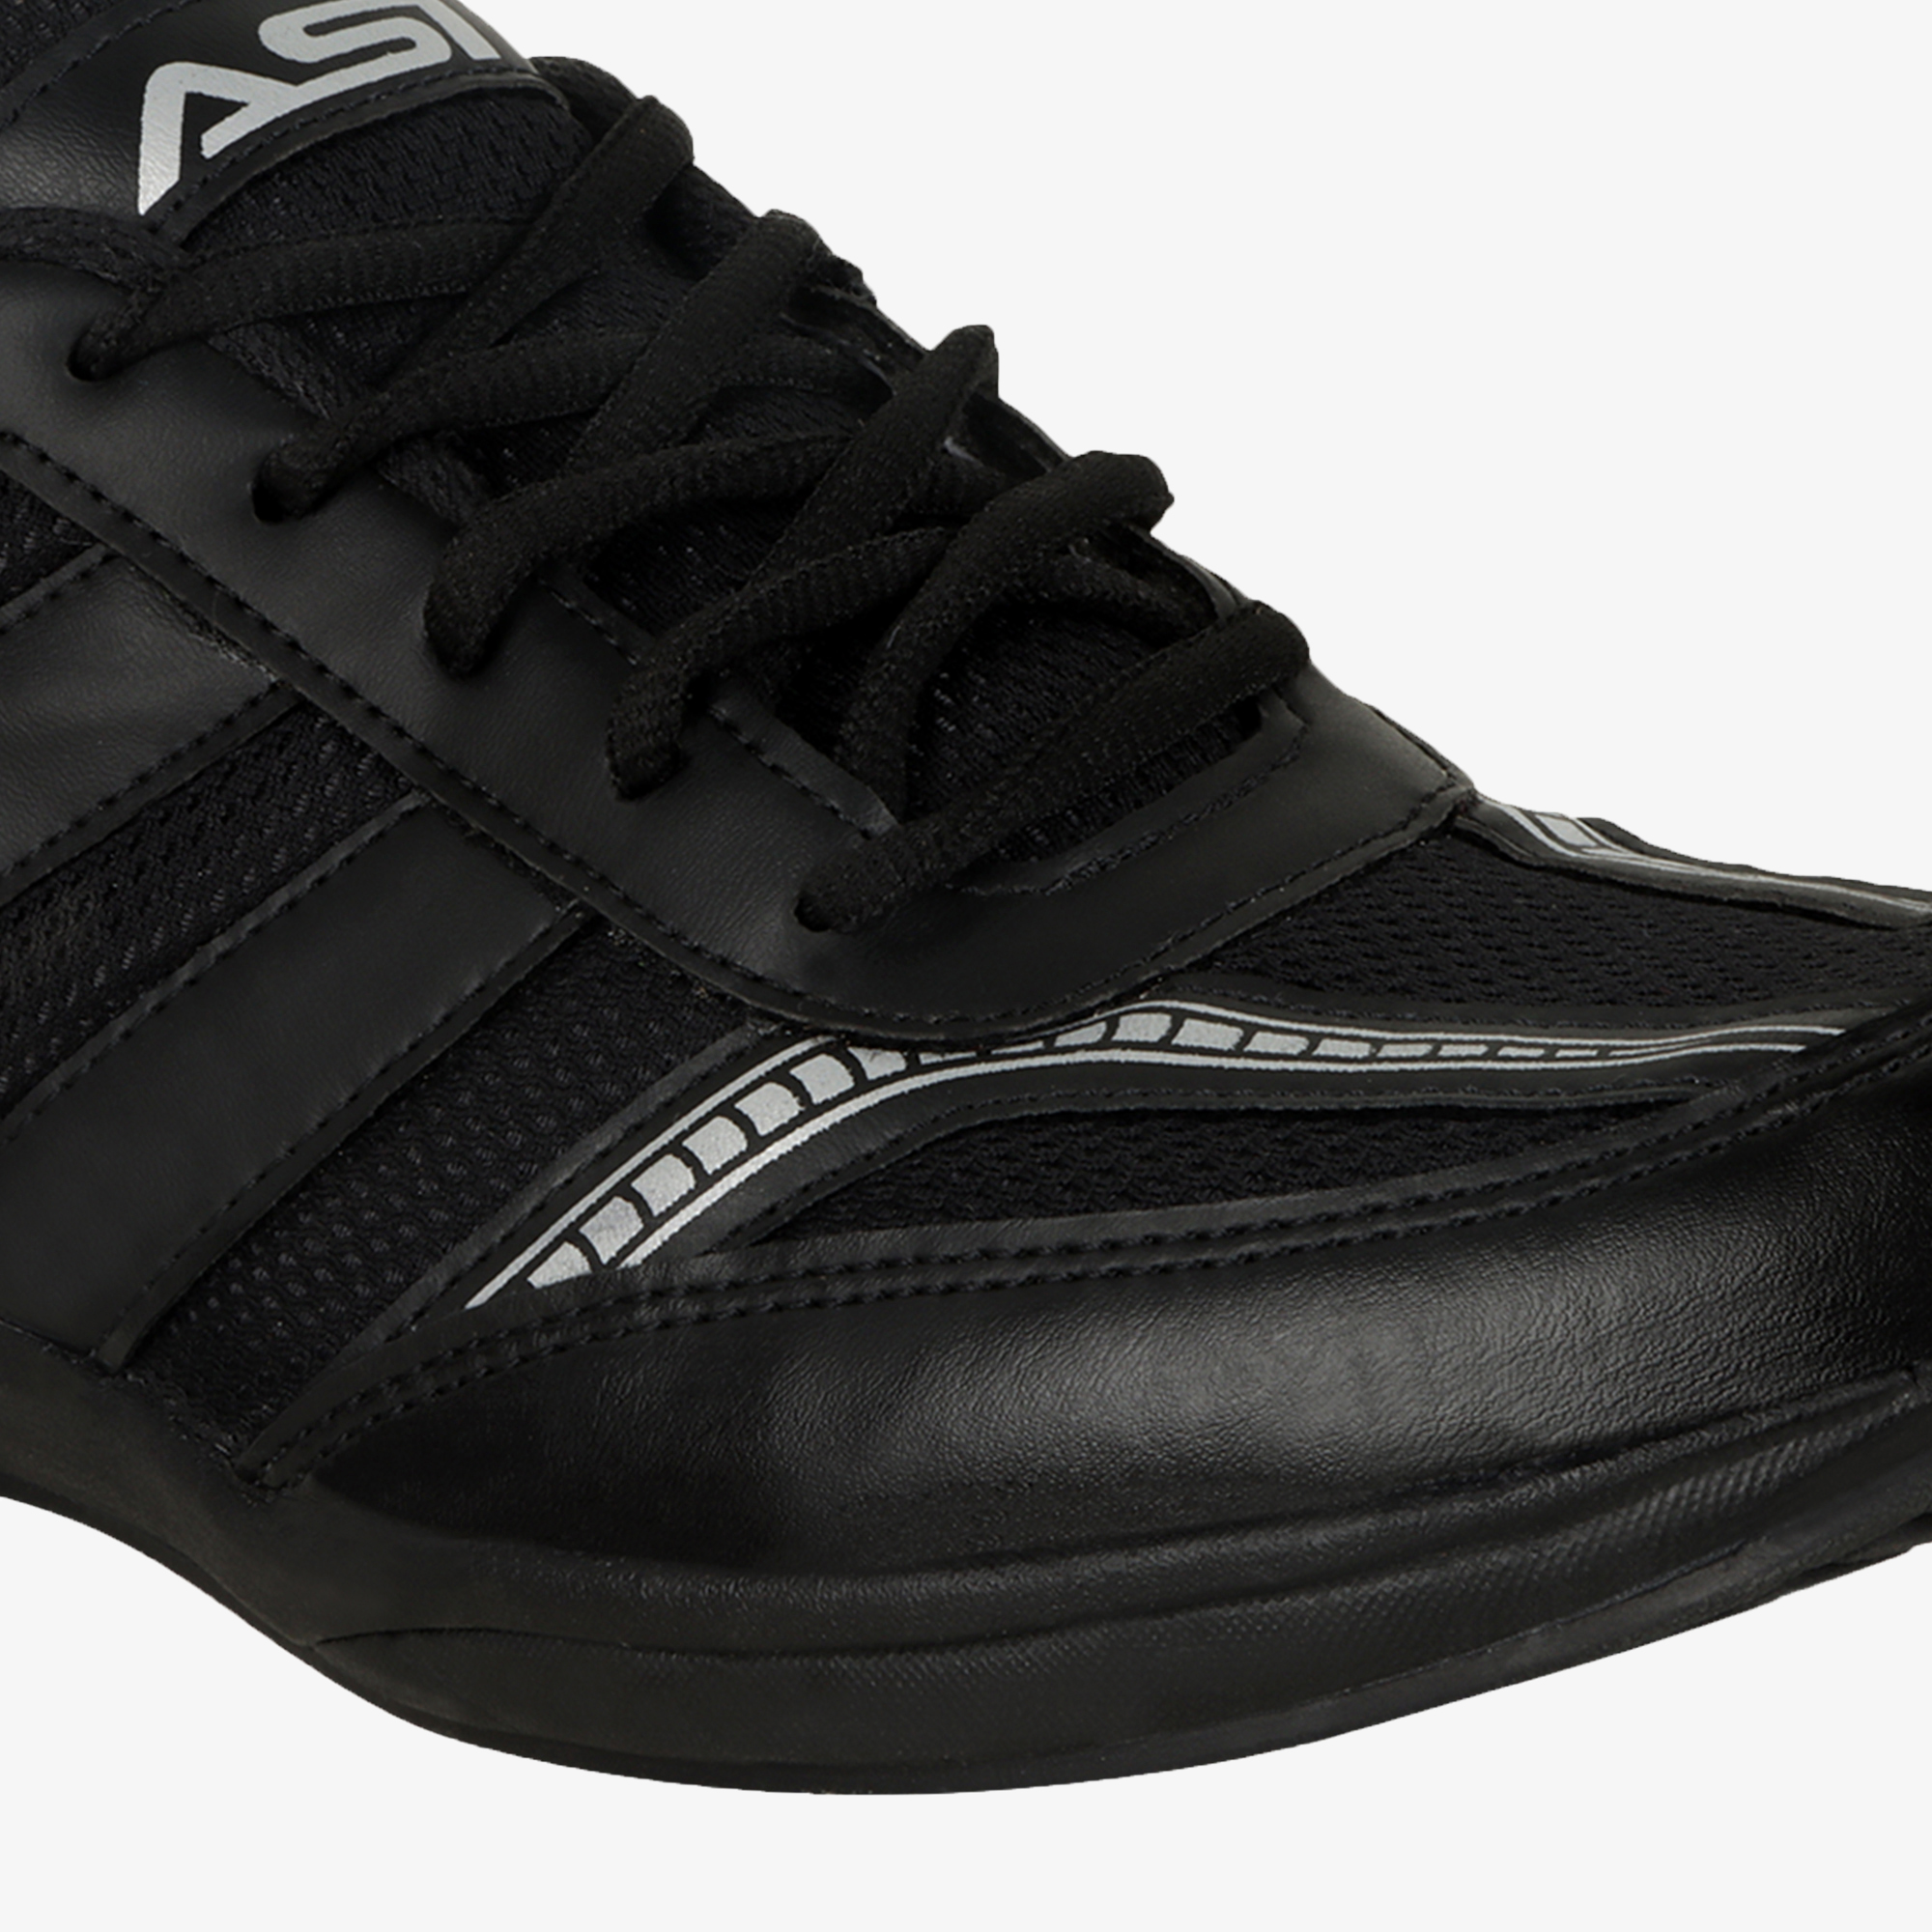 ASI Sprint Sports Shoes Black Color